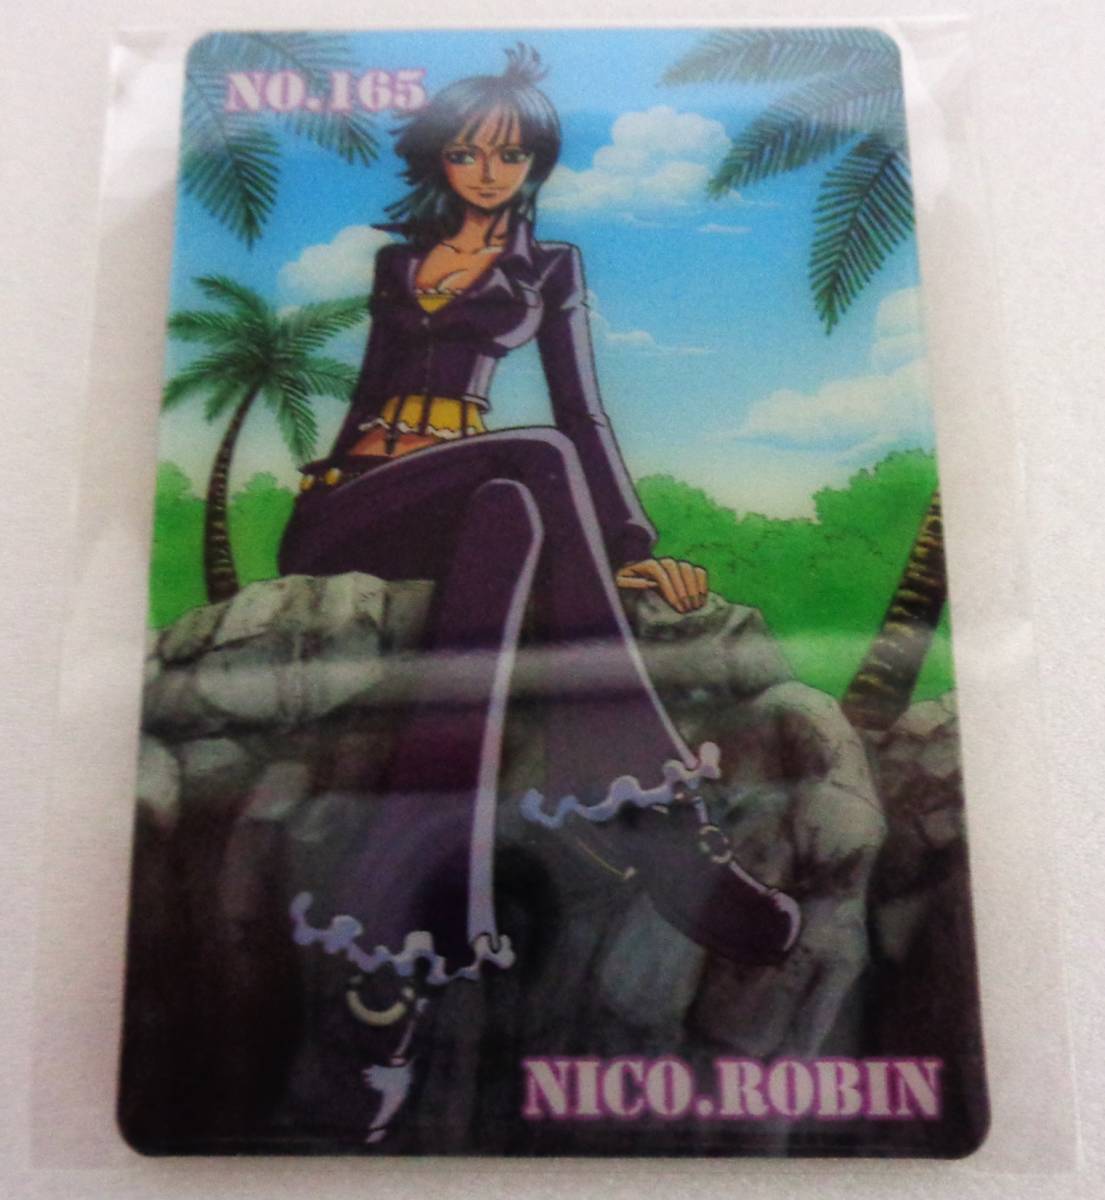 ONEPIECE ワンピース グミカード NO.165 NICO.ROBIN ニコ・ロビン 海賊王グミ プラスティックカードの画像1